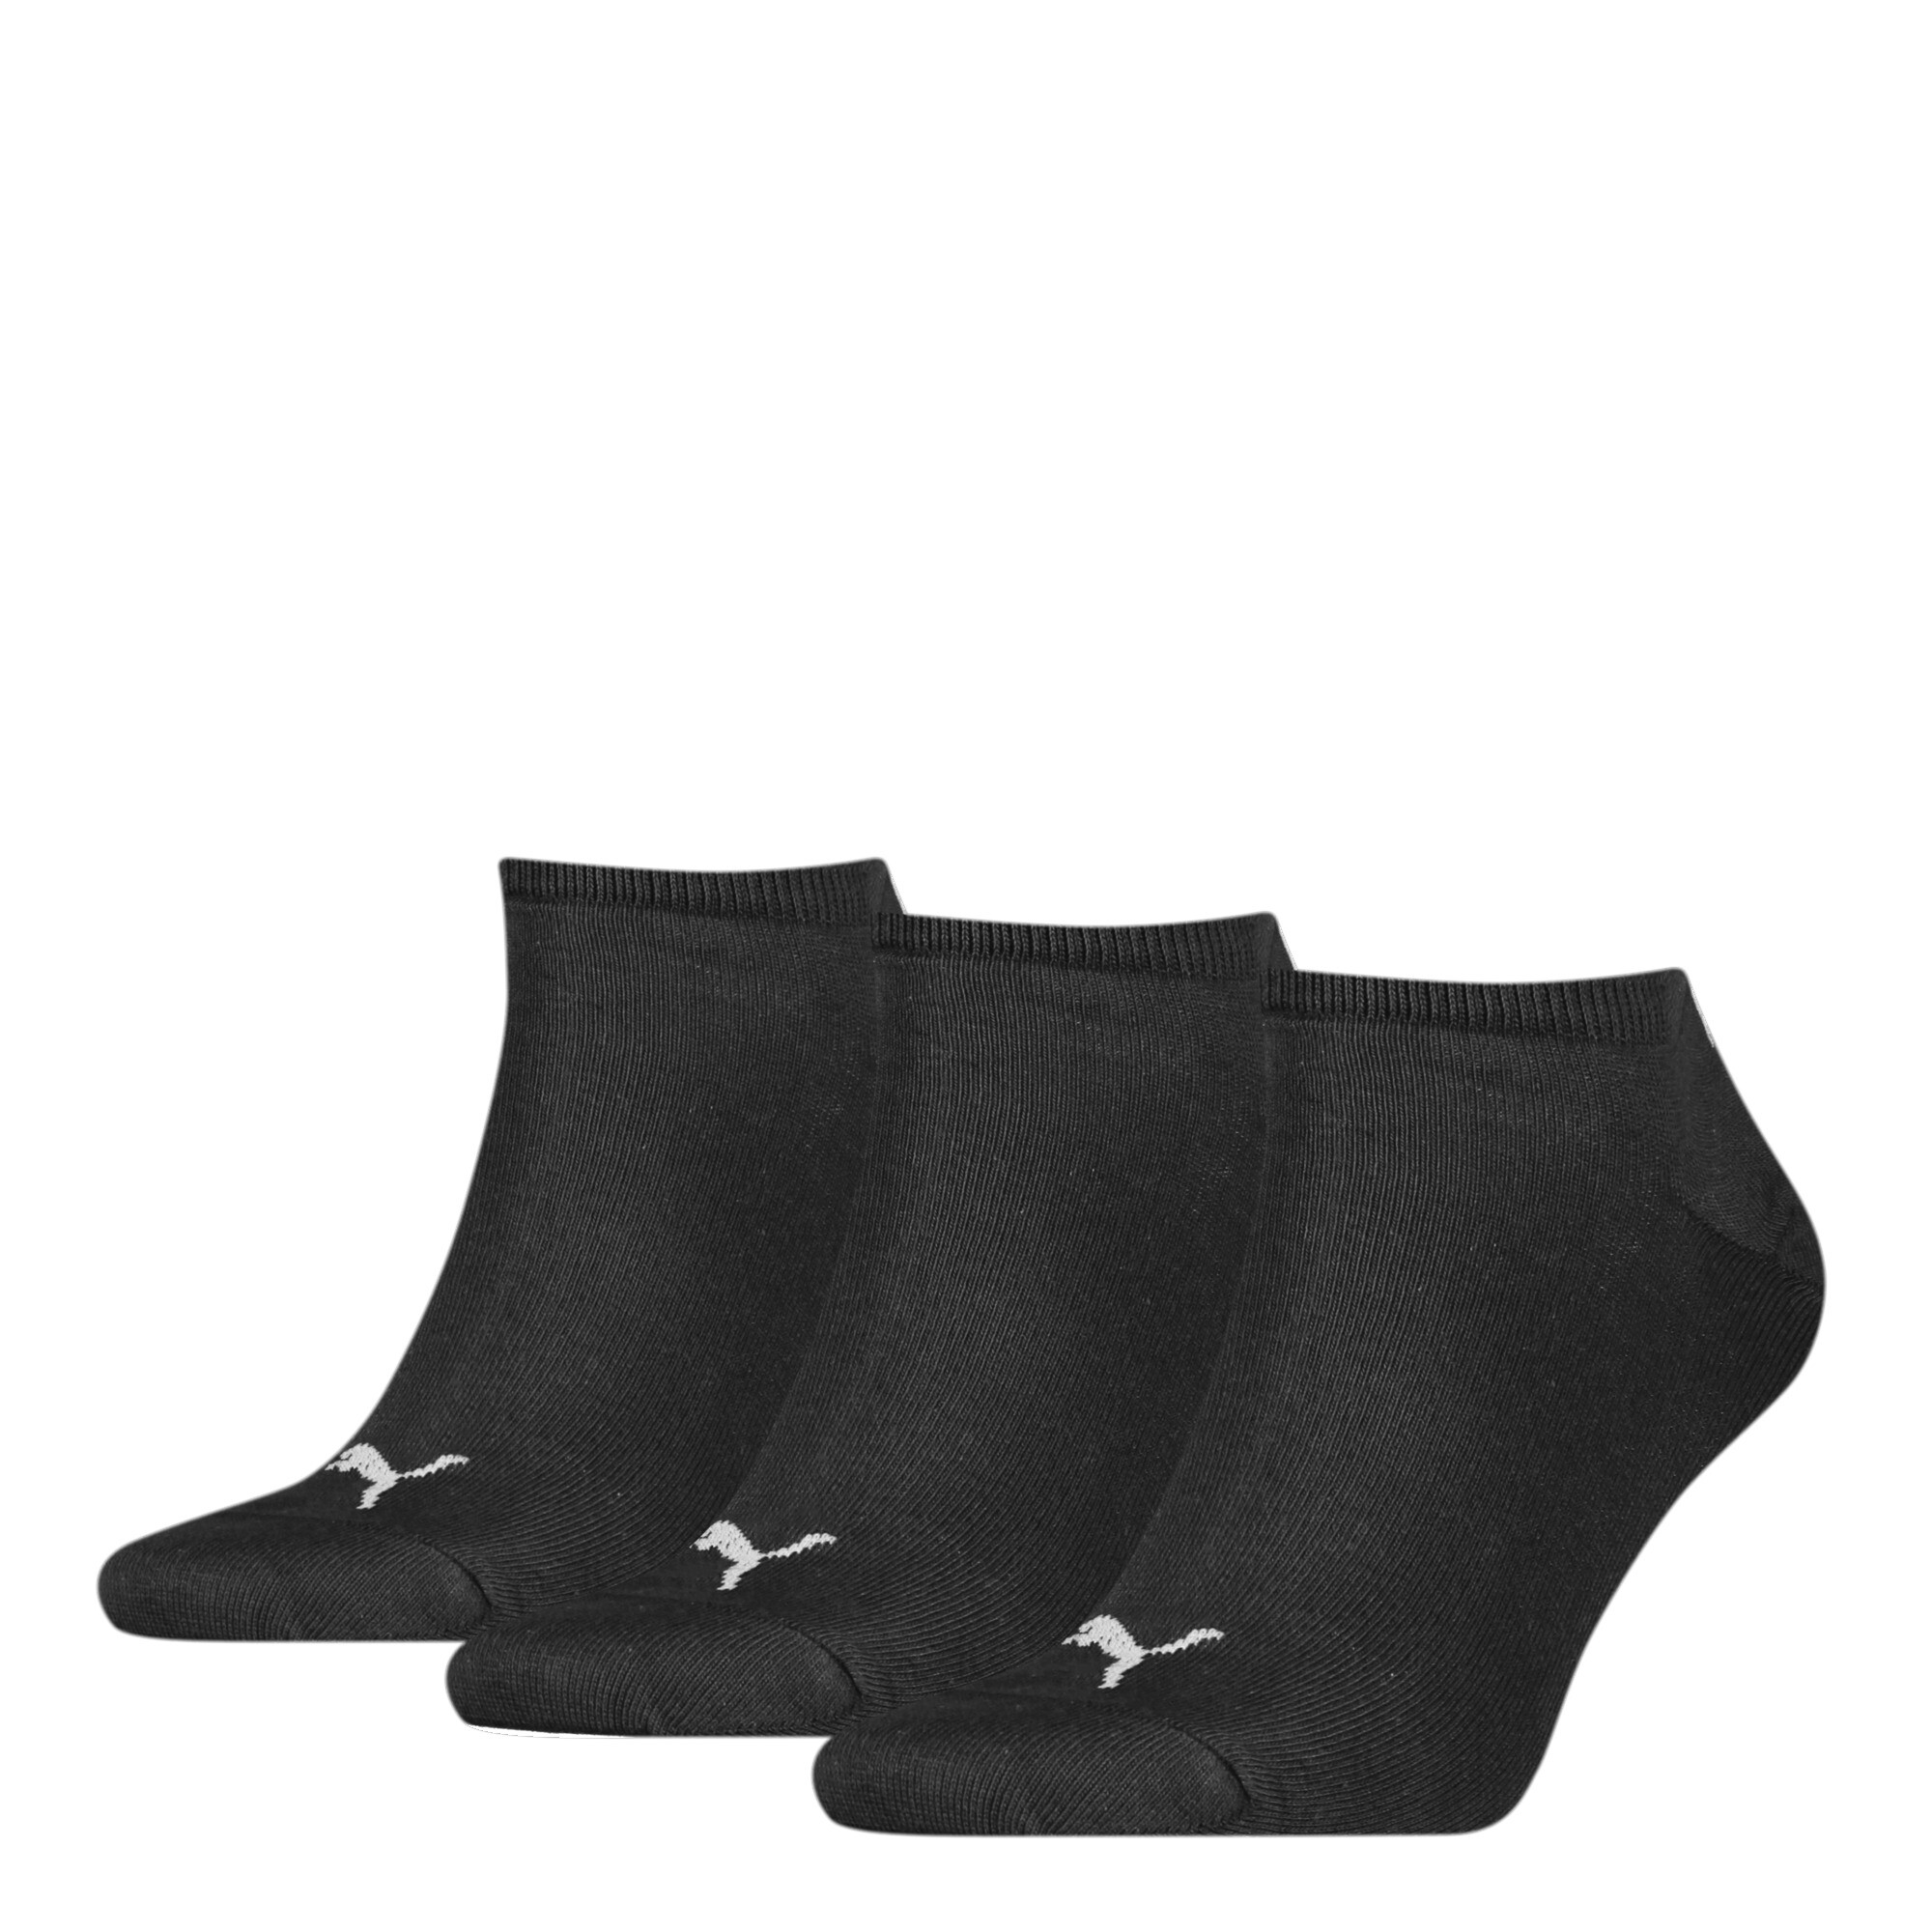 Unisex PUMA Plain Sneaker Trainer Socks 3 Pack In Black, Size 47-49